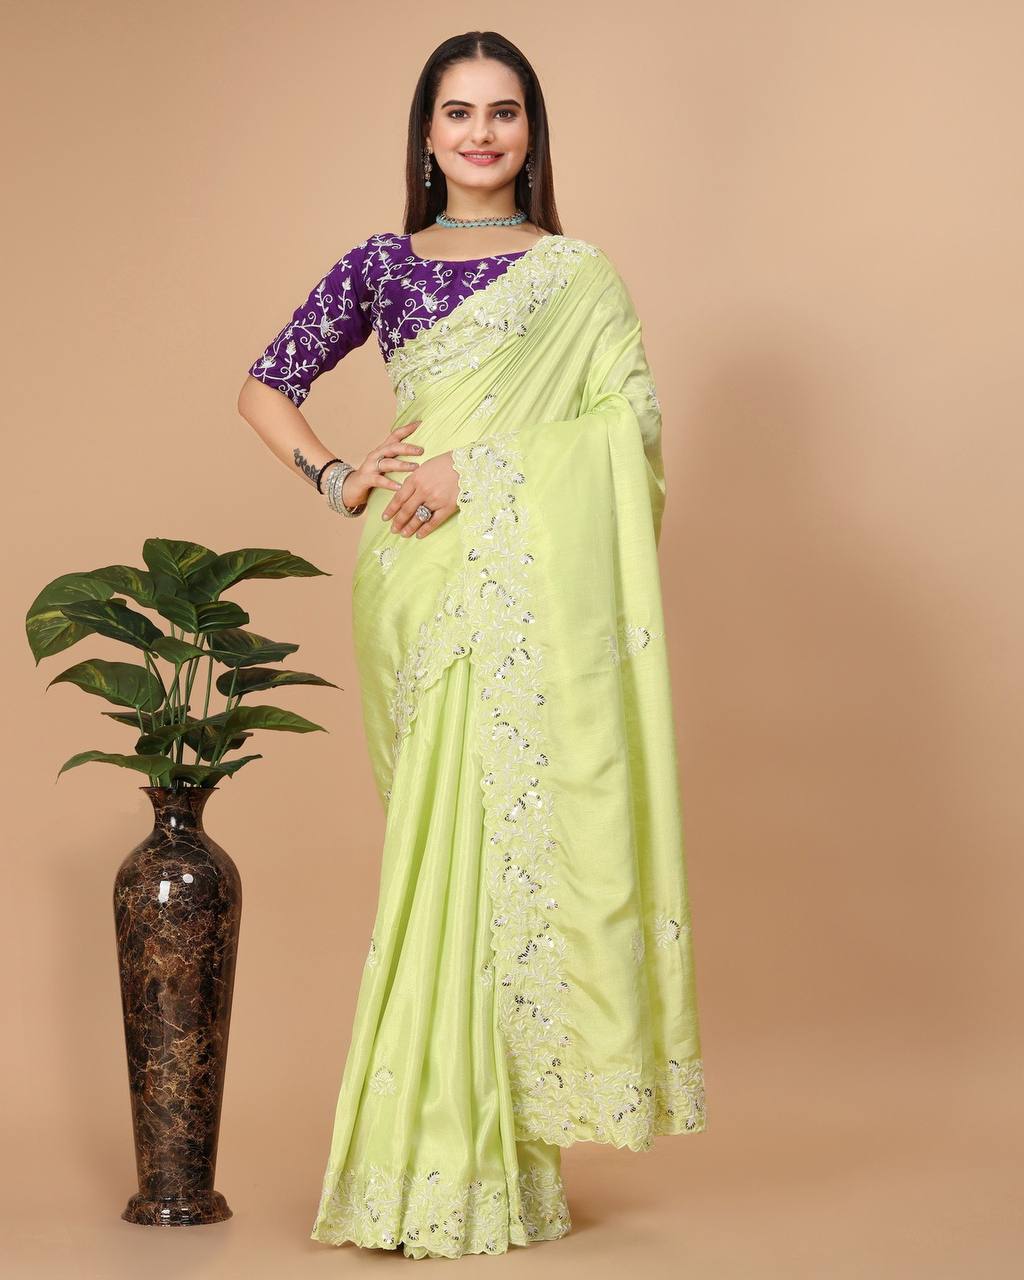 women's wear beautiful dola silk saree with embroidery work